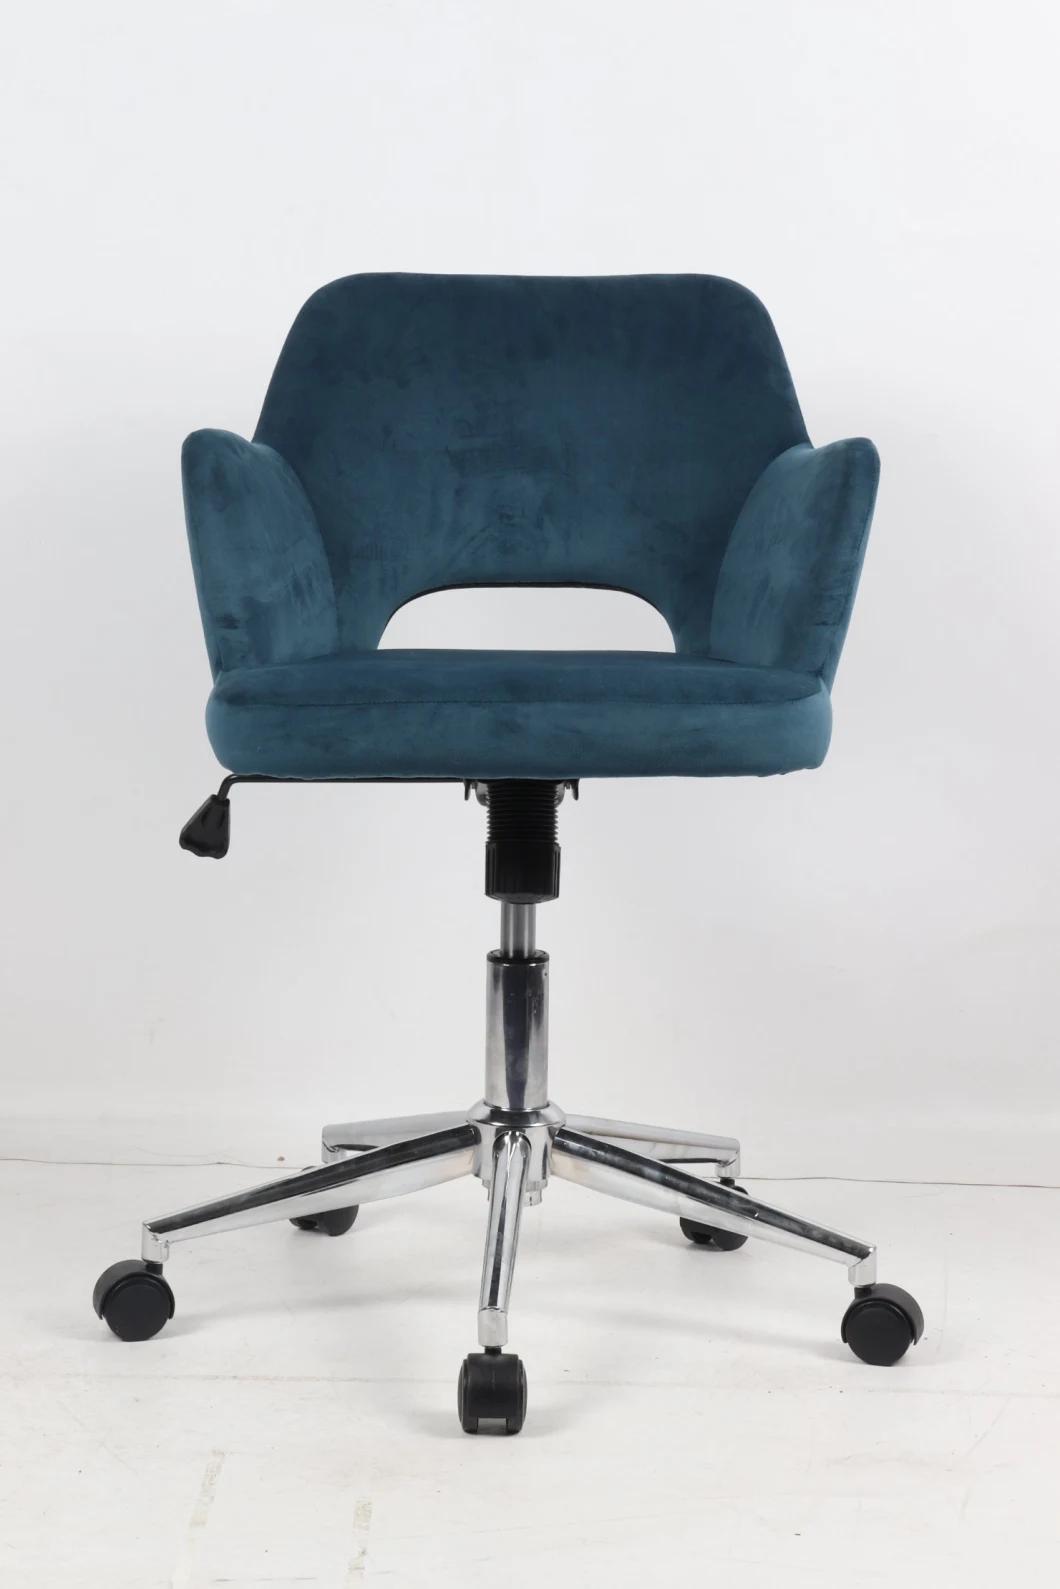 Modern Adjustable Luxury High Quality Dining Chair Bar Stool Furniture